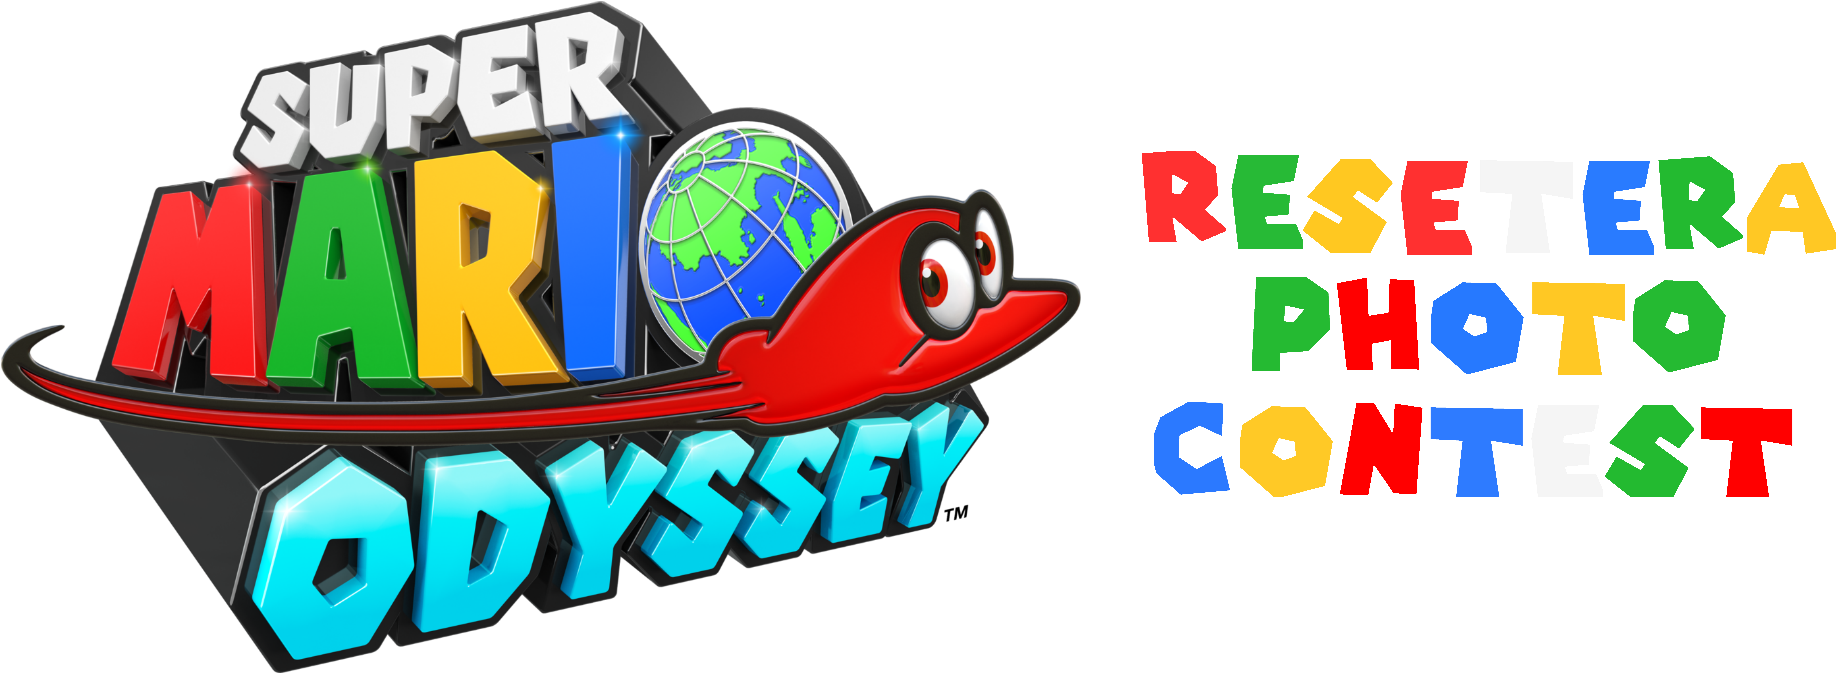 super mario odyssey logo,gaming.